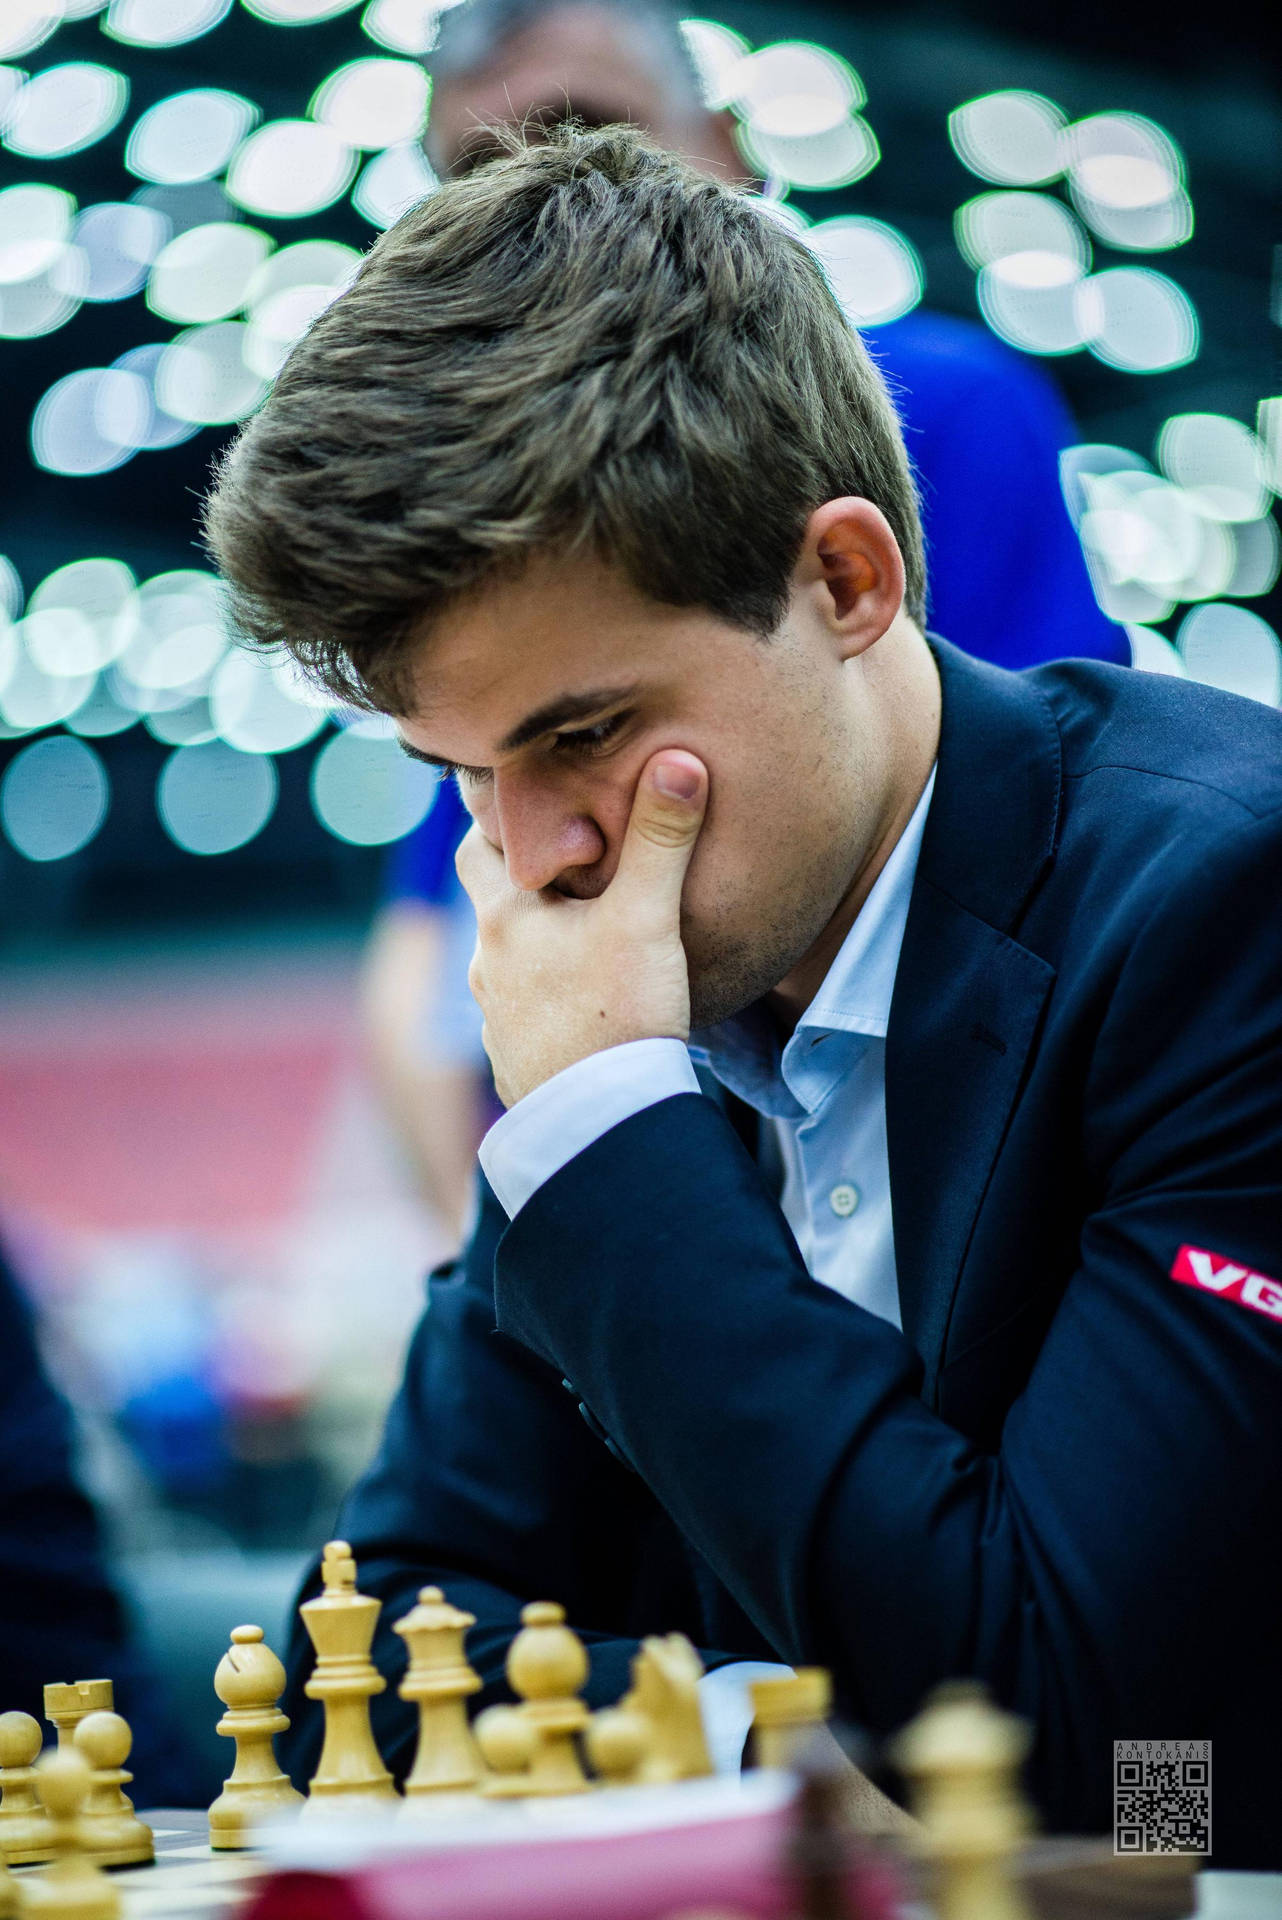 Dette tapet er designet til at ære den verdensberømte skakspiller, Magnus Carlsen! Wallpaper